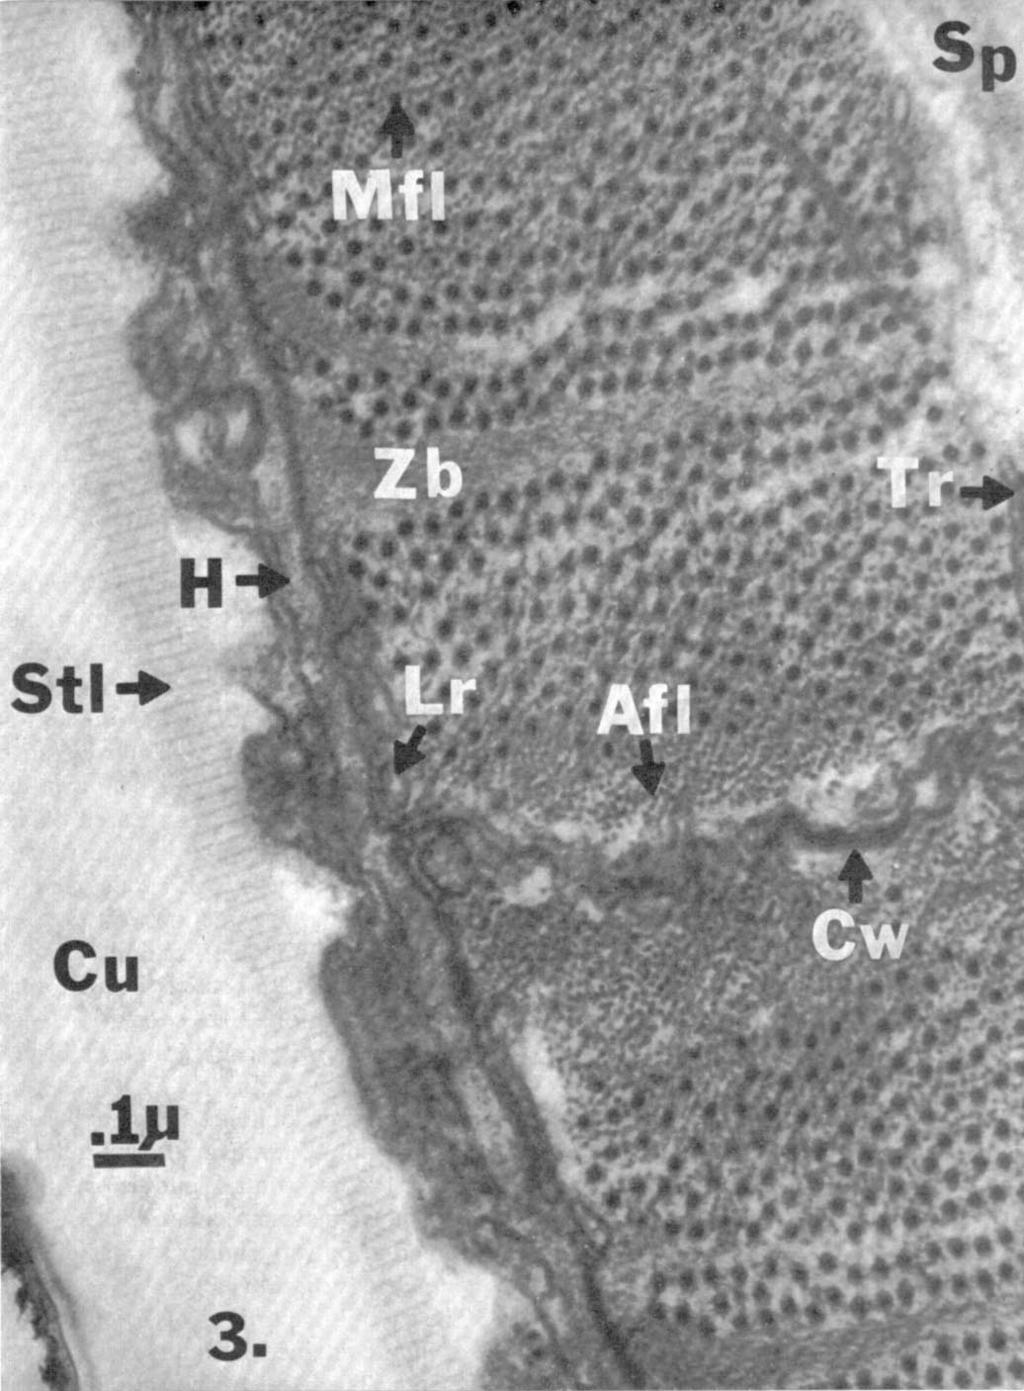 myosin filament (Mfl), Z-band (Zb), transverse sarcoplasmic reticulum (Tr), hypodermis (H), longitudinal